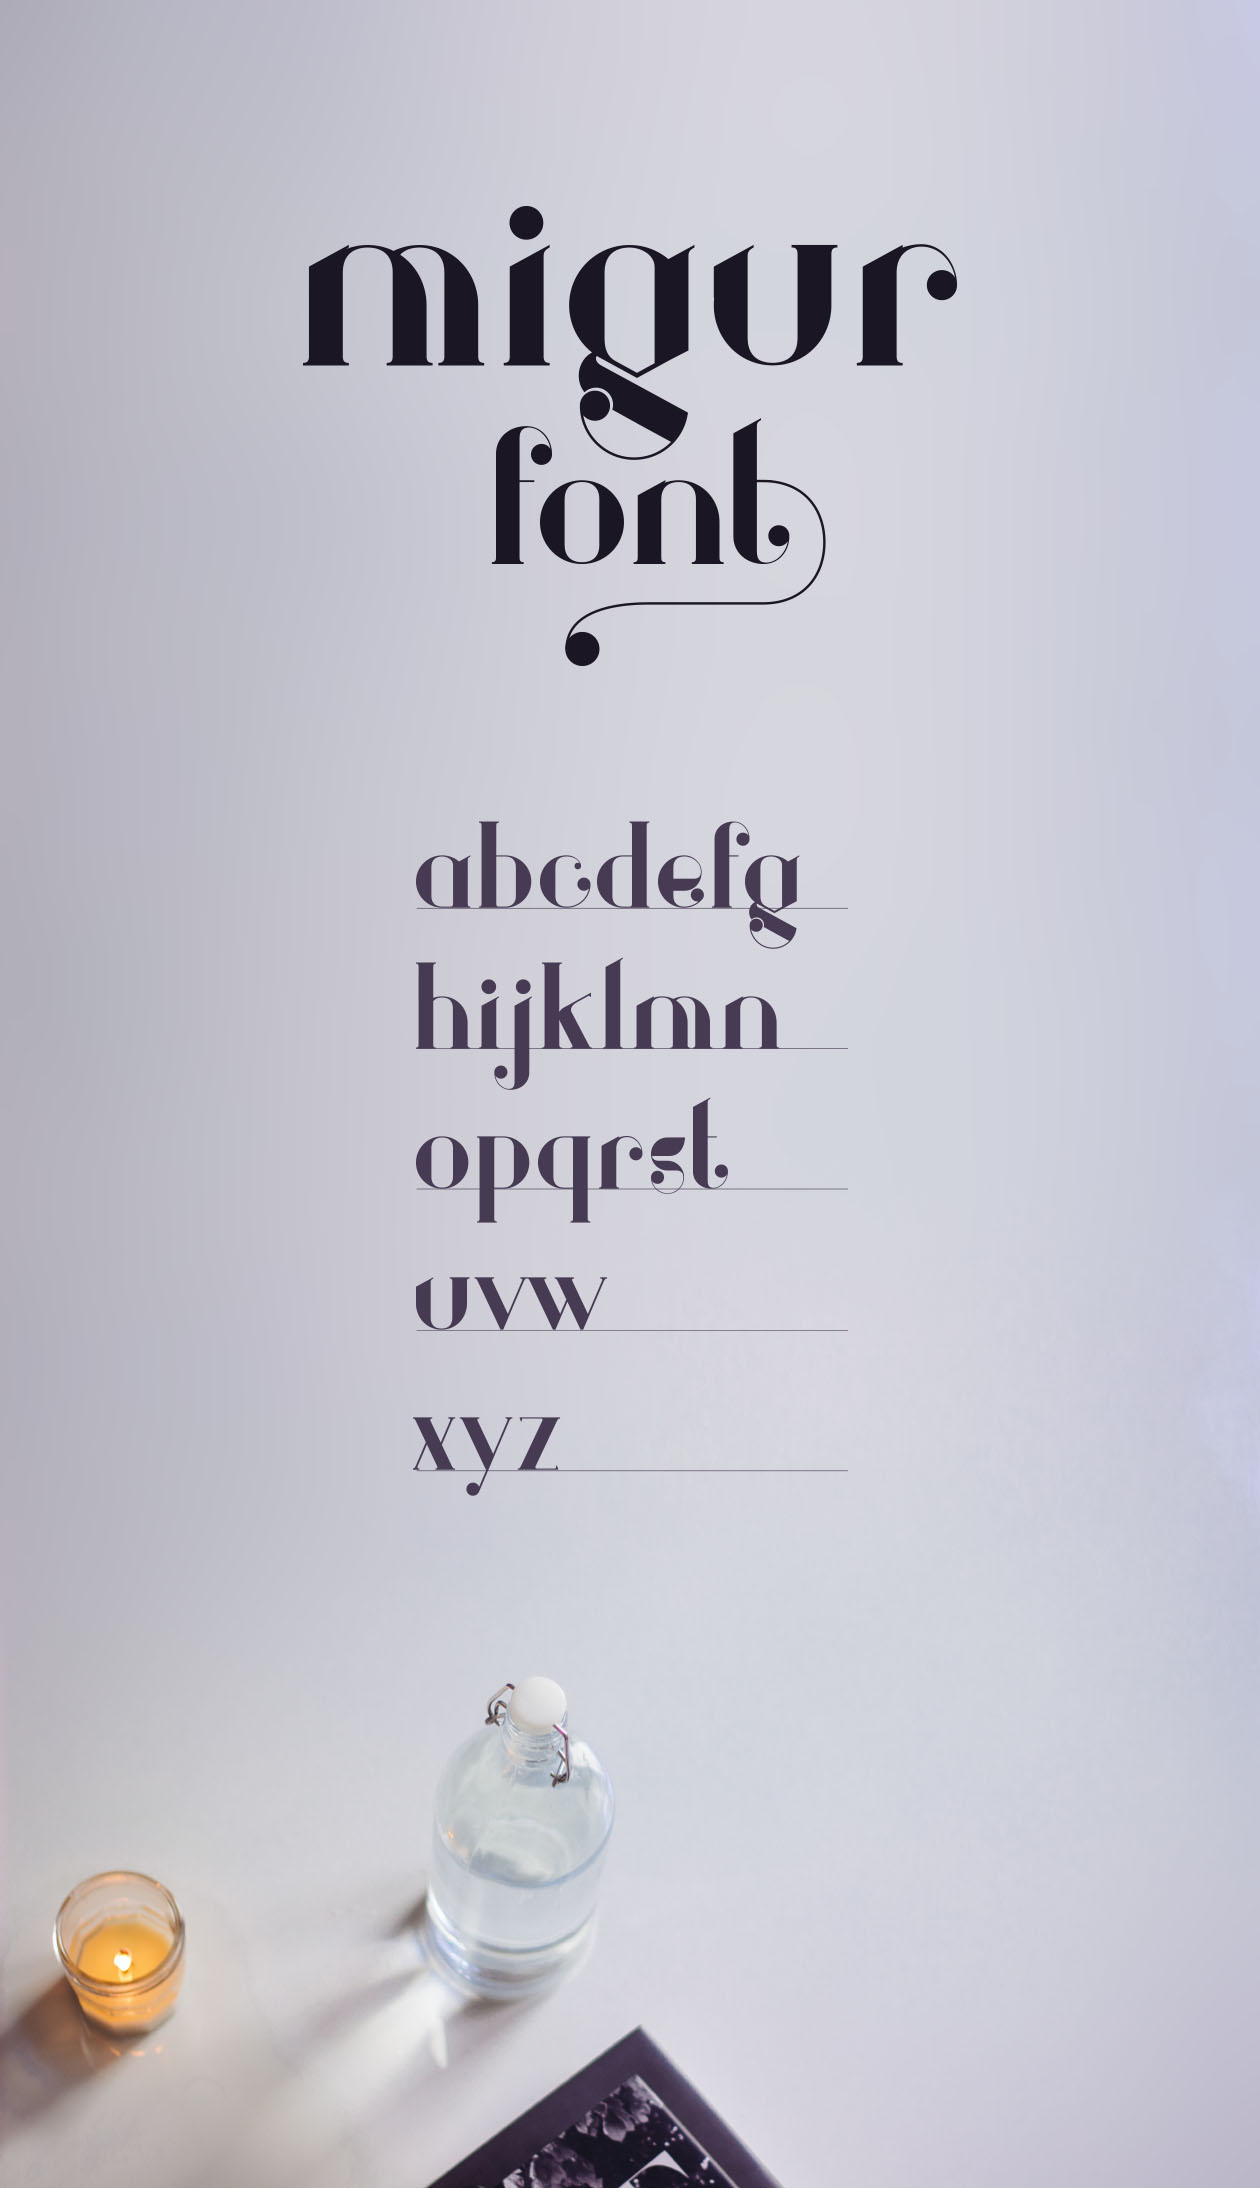 Behance网站推荐最佳英文排版印刷字体蚂蚁素材精选之一 Migur Serif Font插图(1)